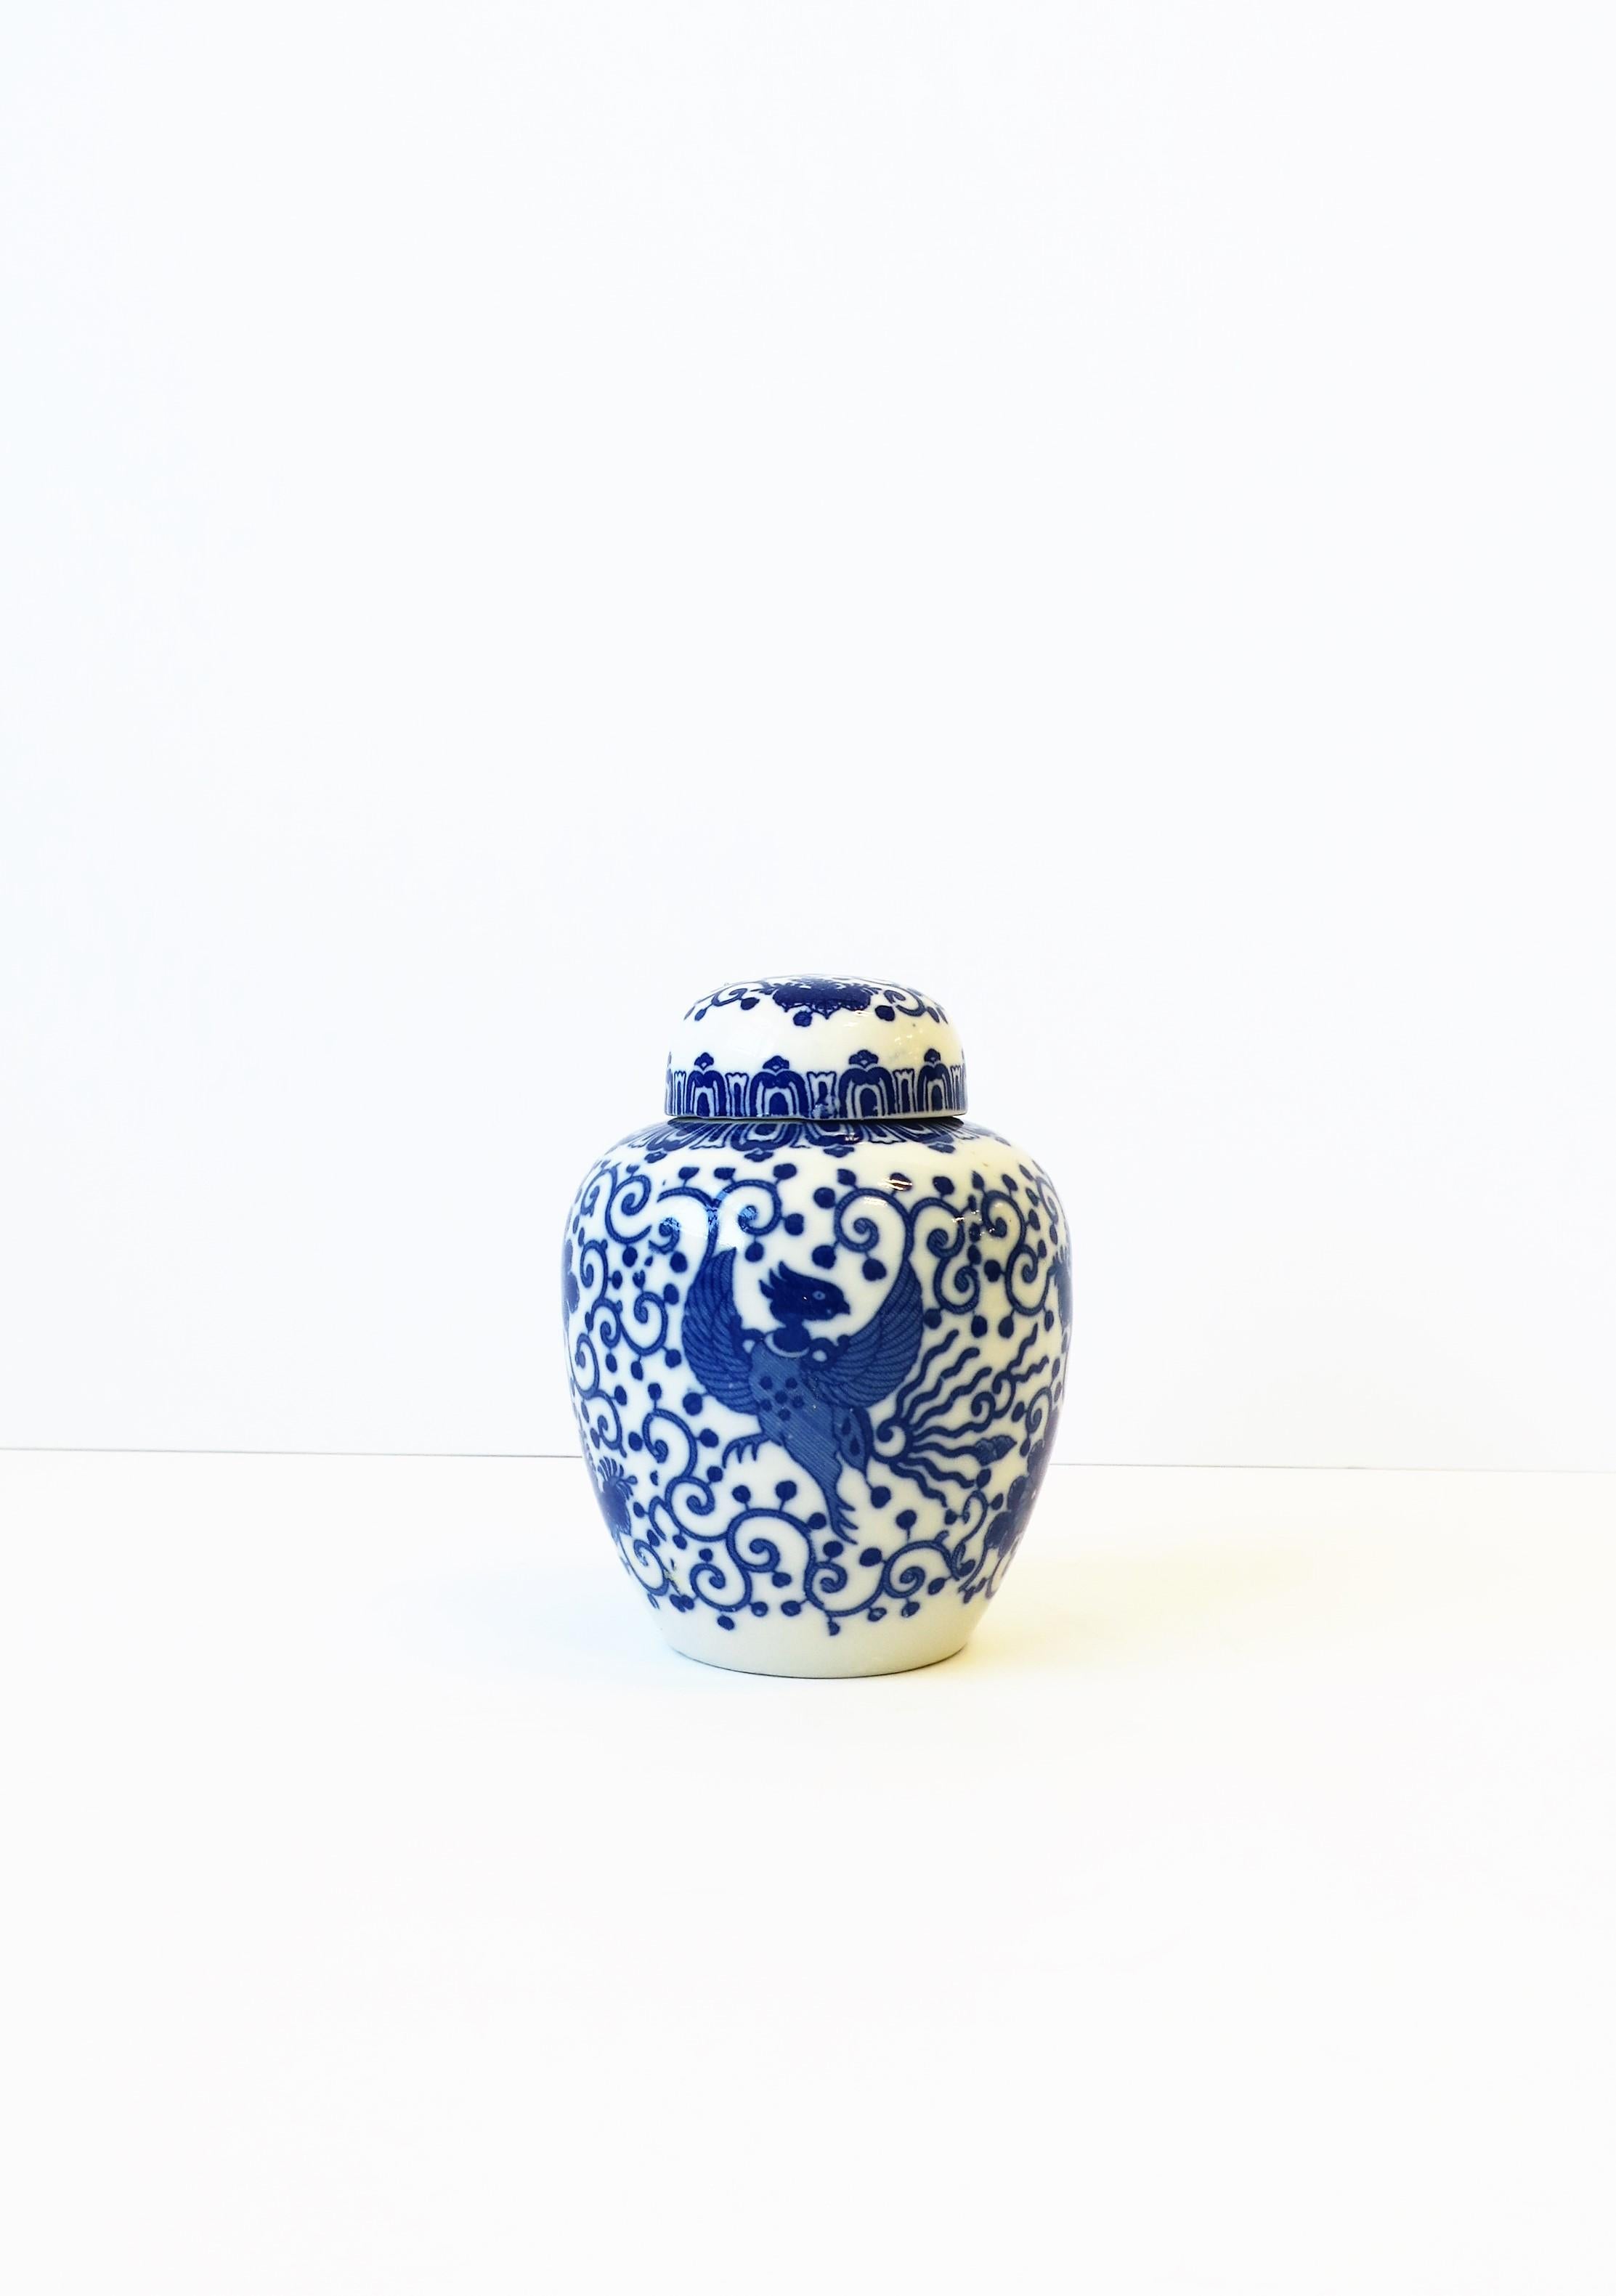 Chinoiserie Blue and White Porcelain Japanese Ginger Jars, Set